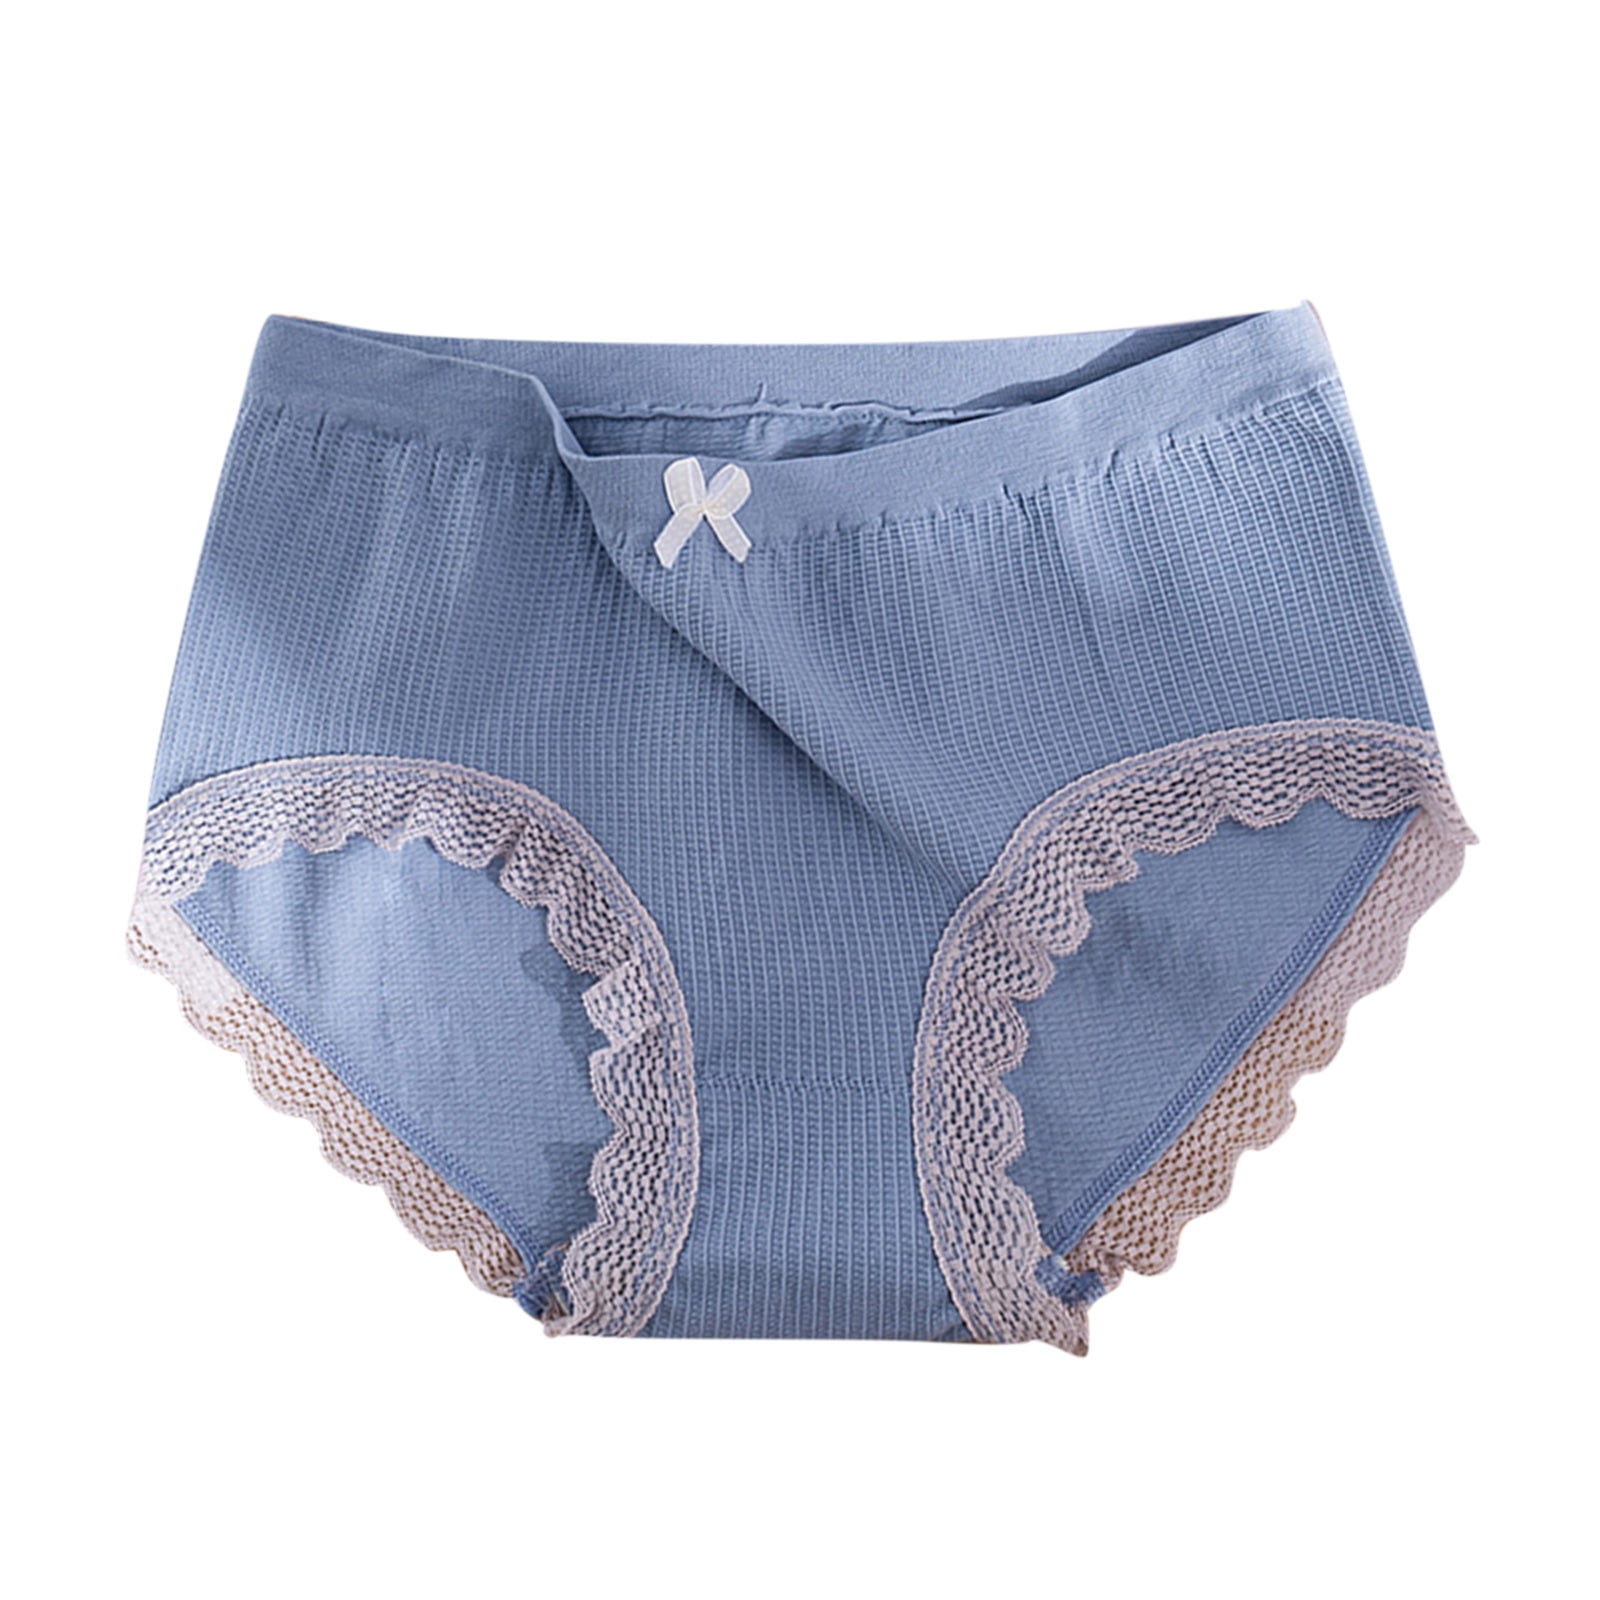 Aayomet Women's Brief Underwear Medium Waist High End Lace Pants Briefs  Flat Angle (A, S)